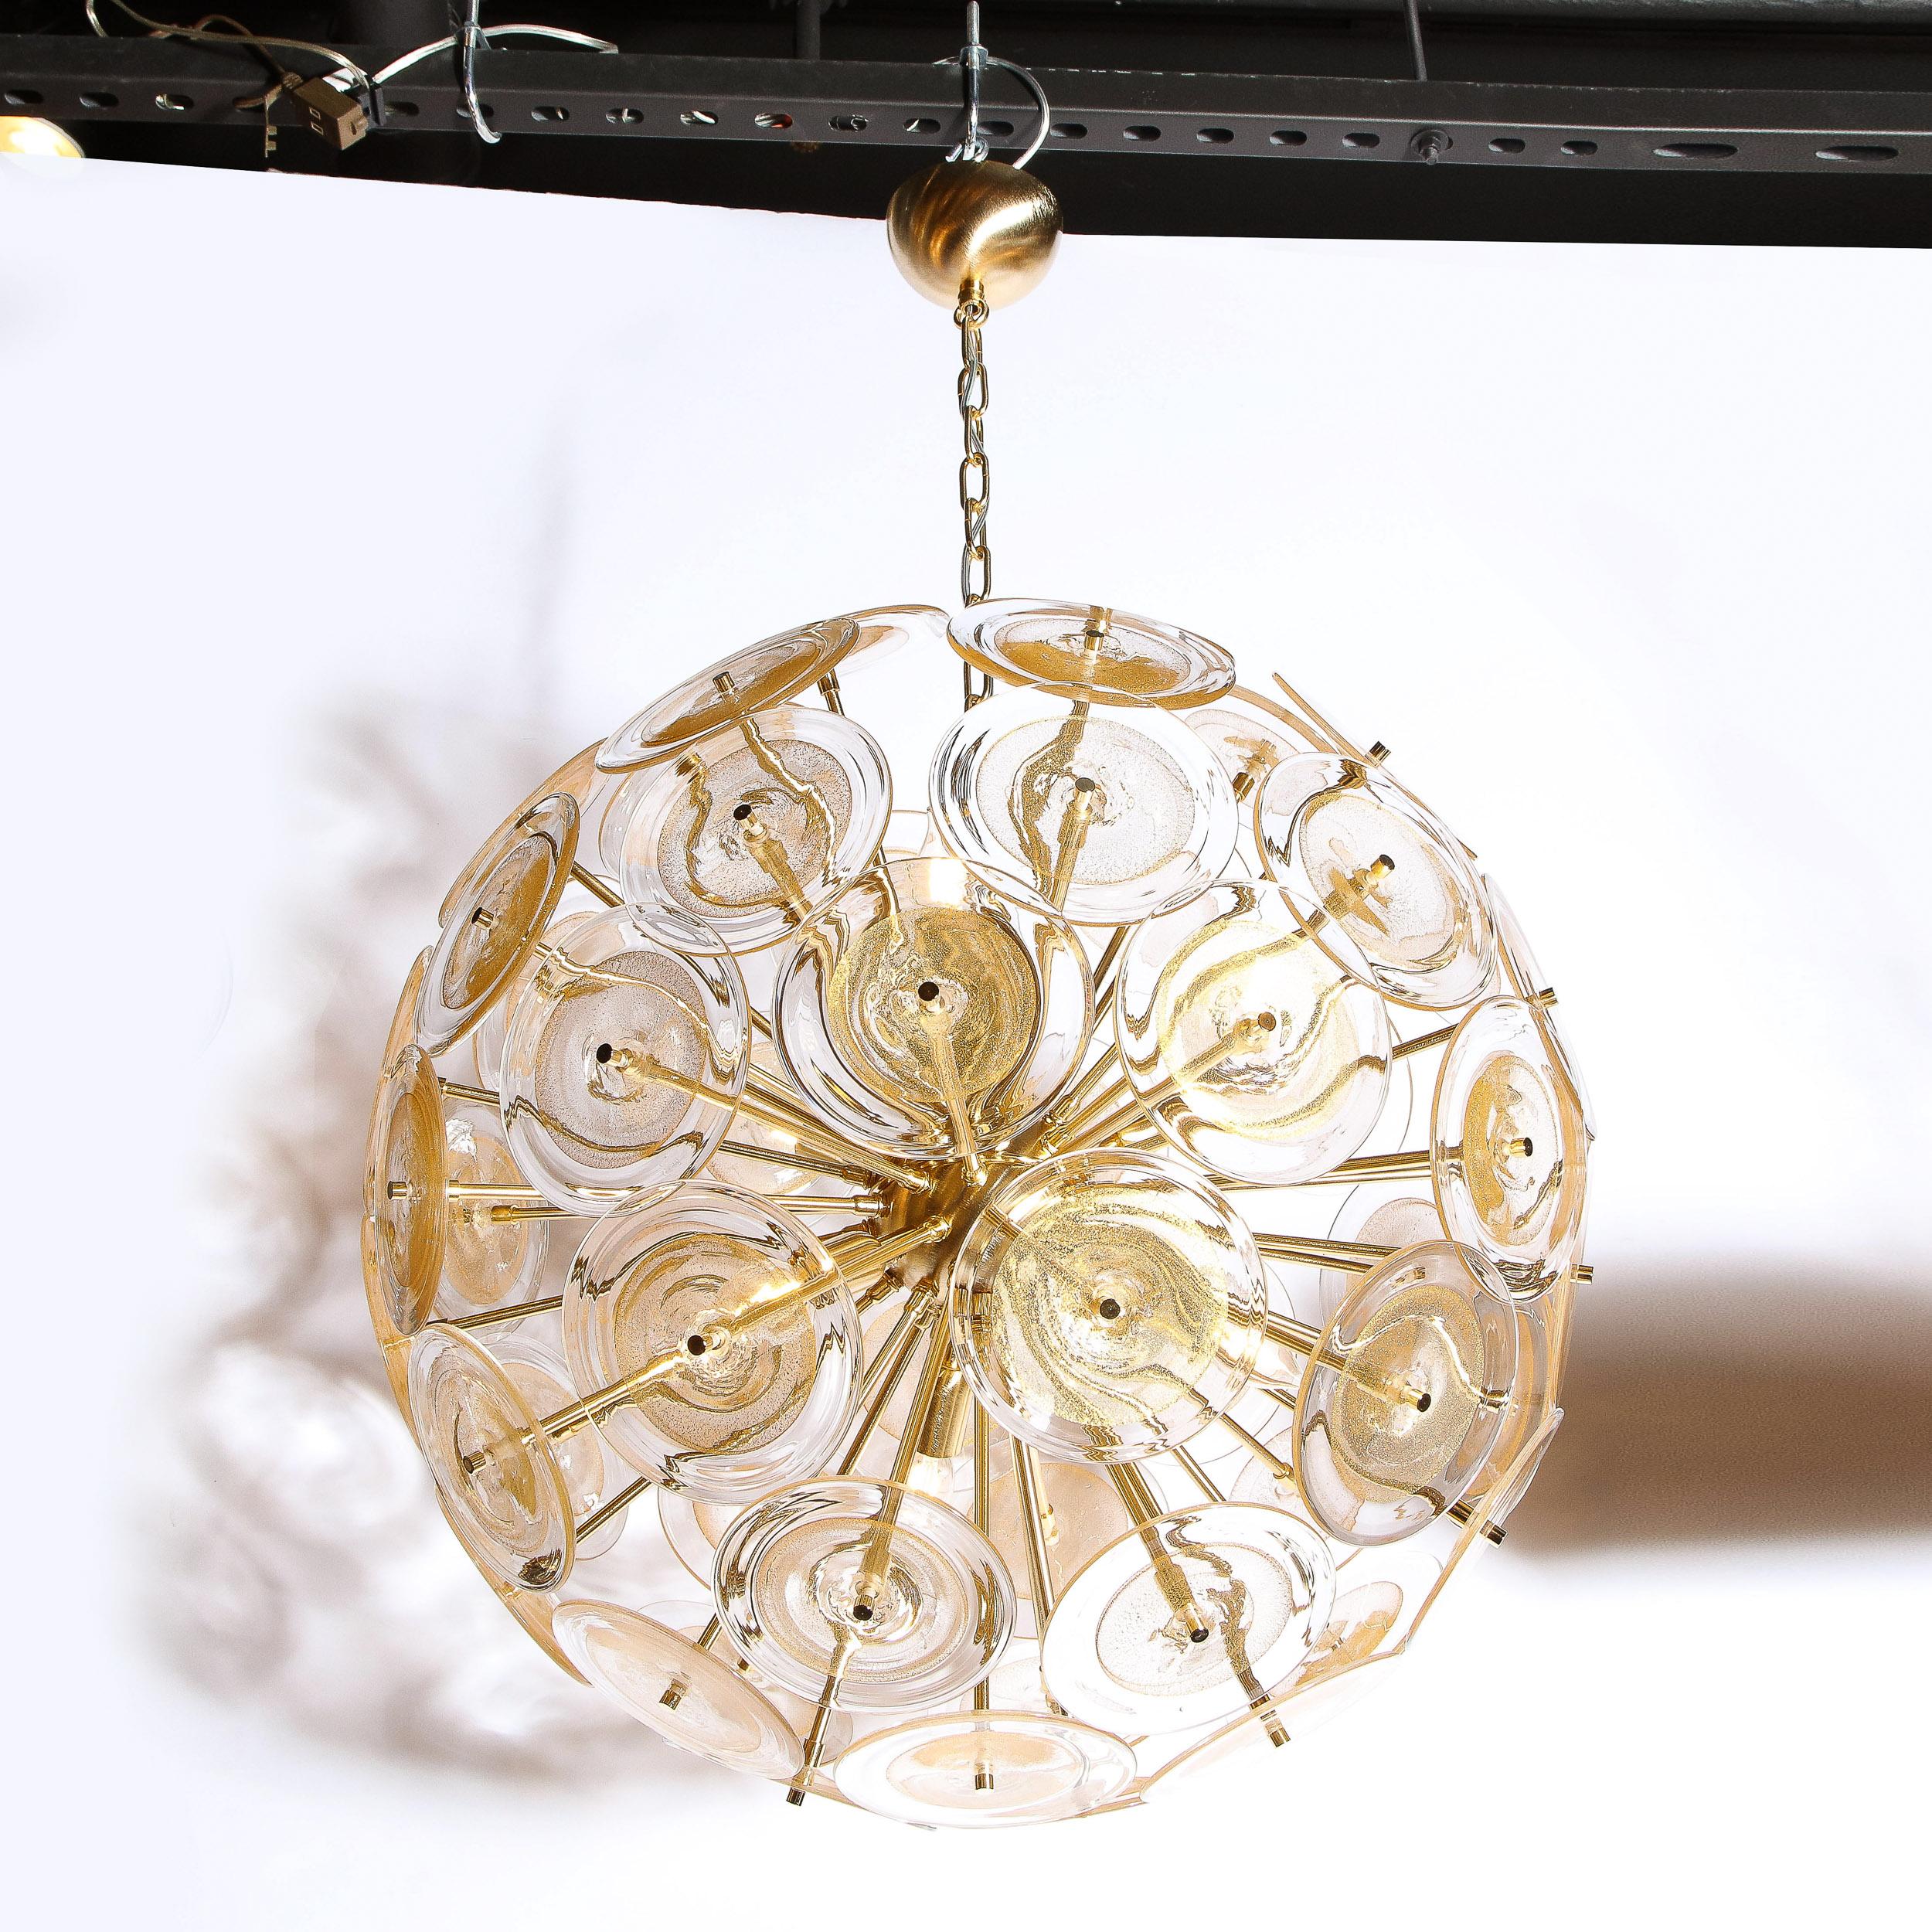 Modernist Brass Sputnik Chandelier W/ Handblown Translucent Murano Glass Discs For Sale 3